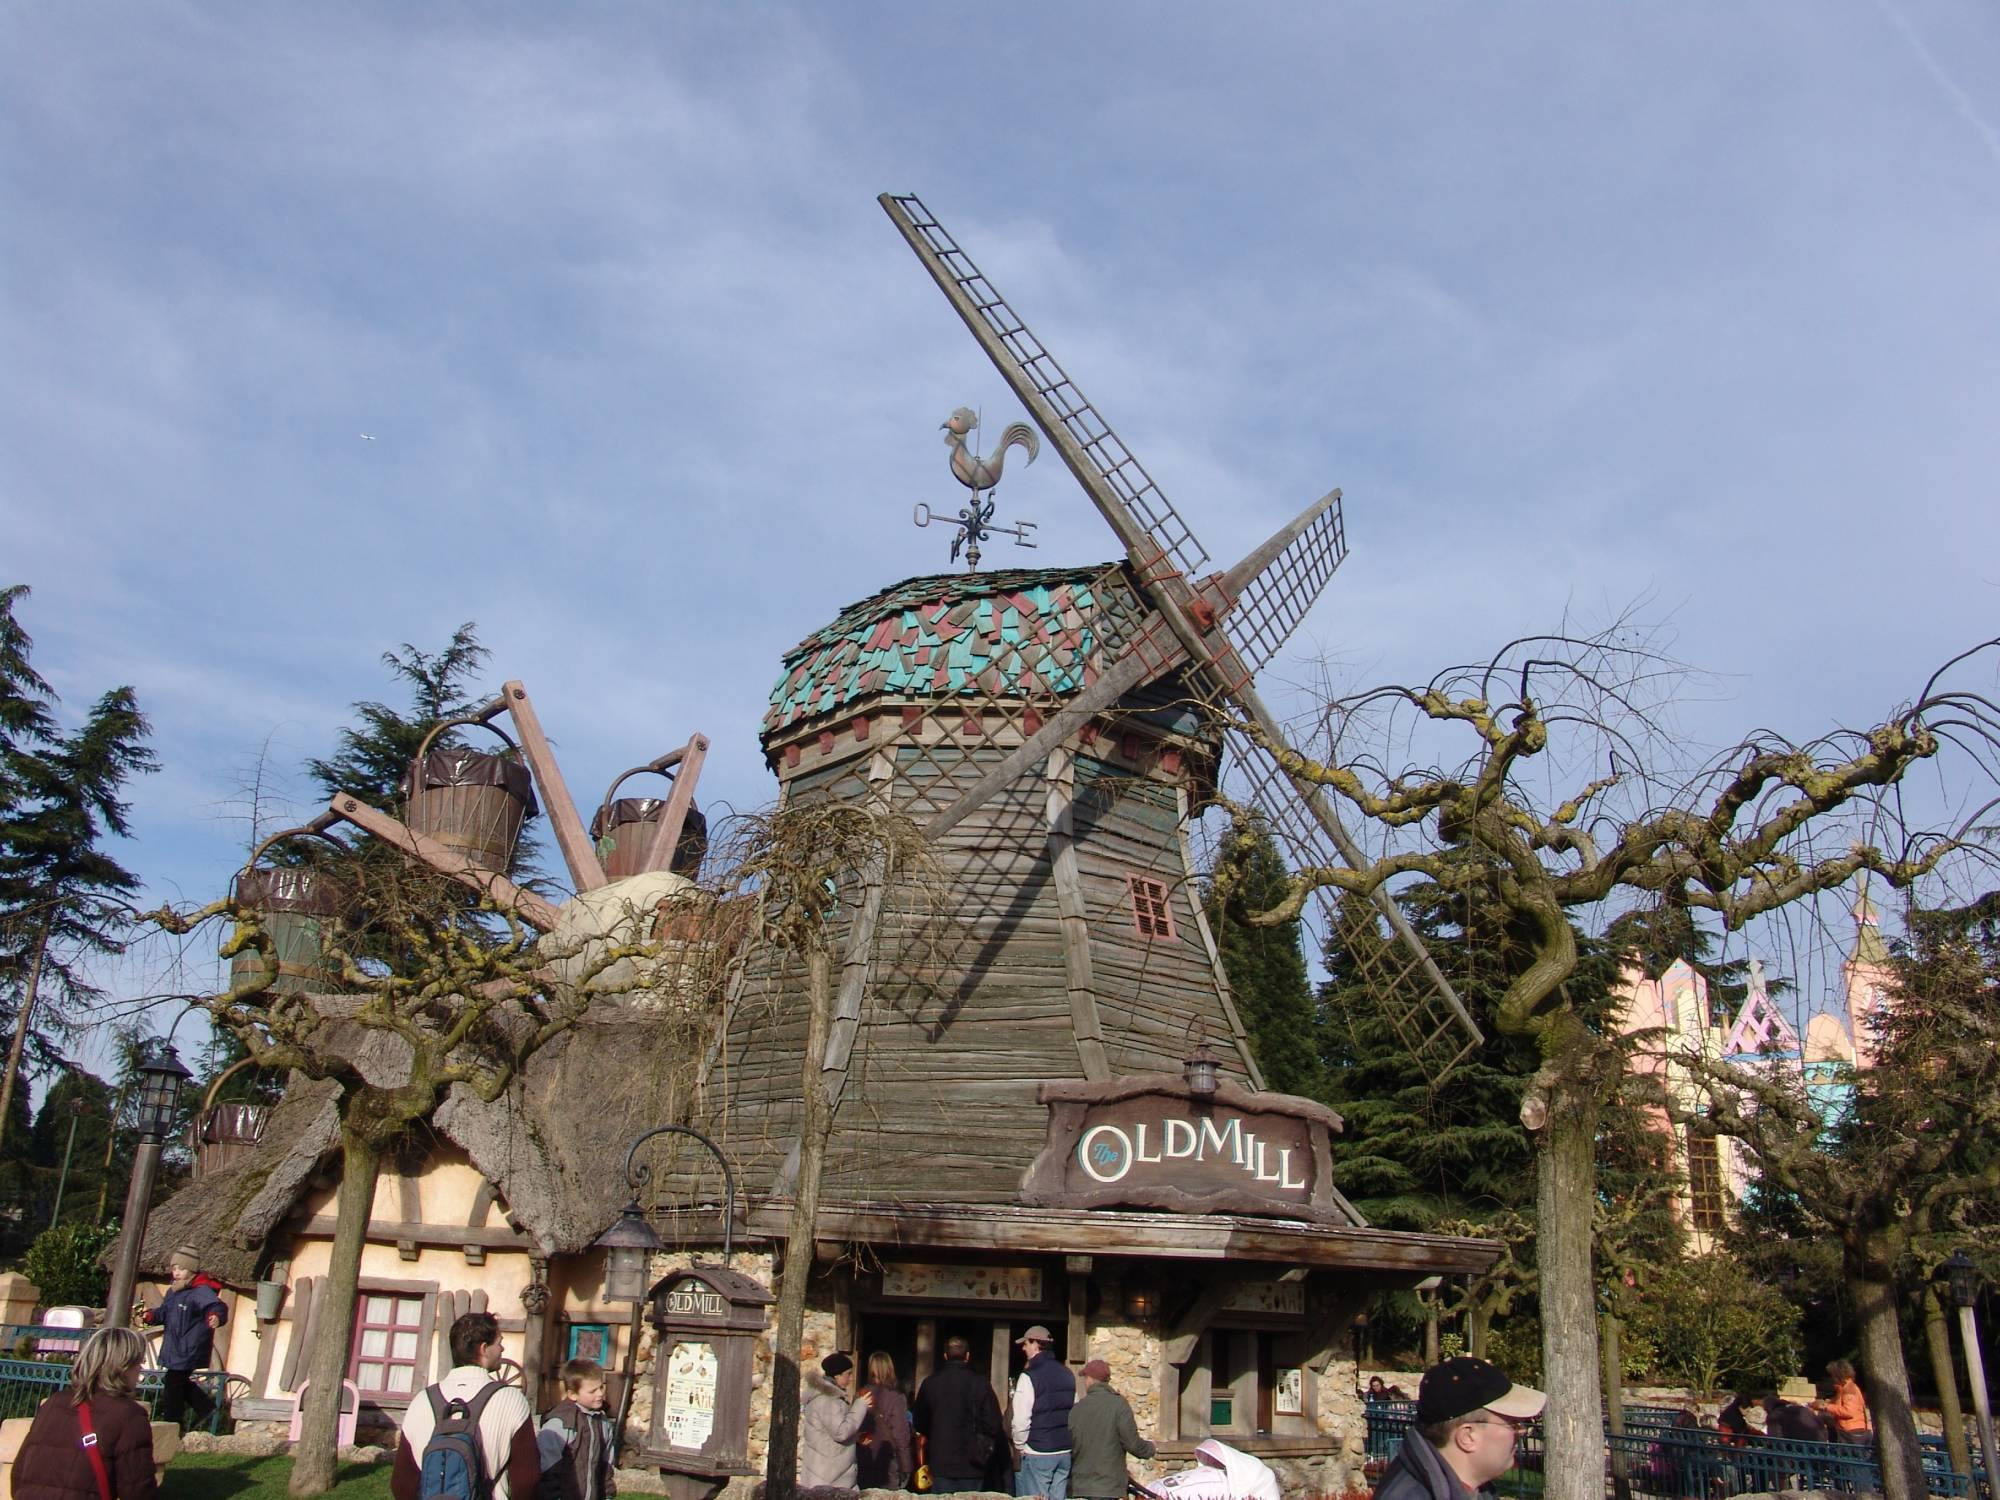 Disneyland Paris - The Old Mill